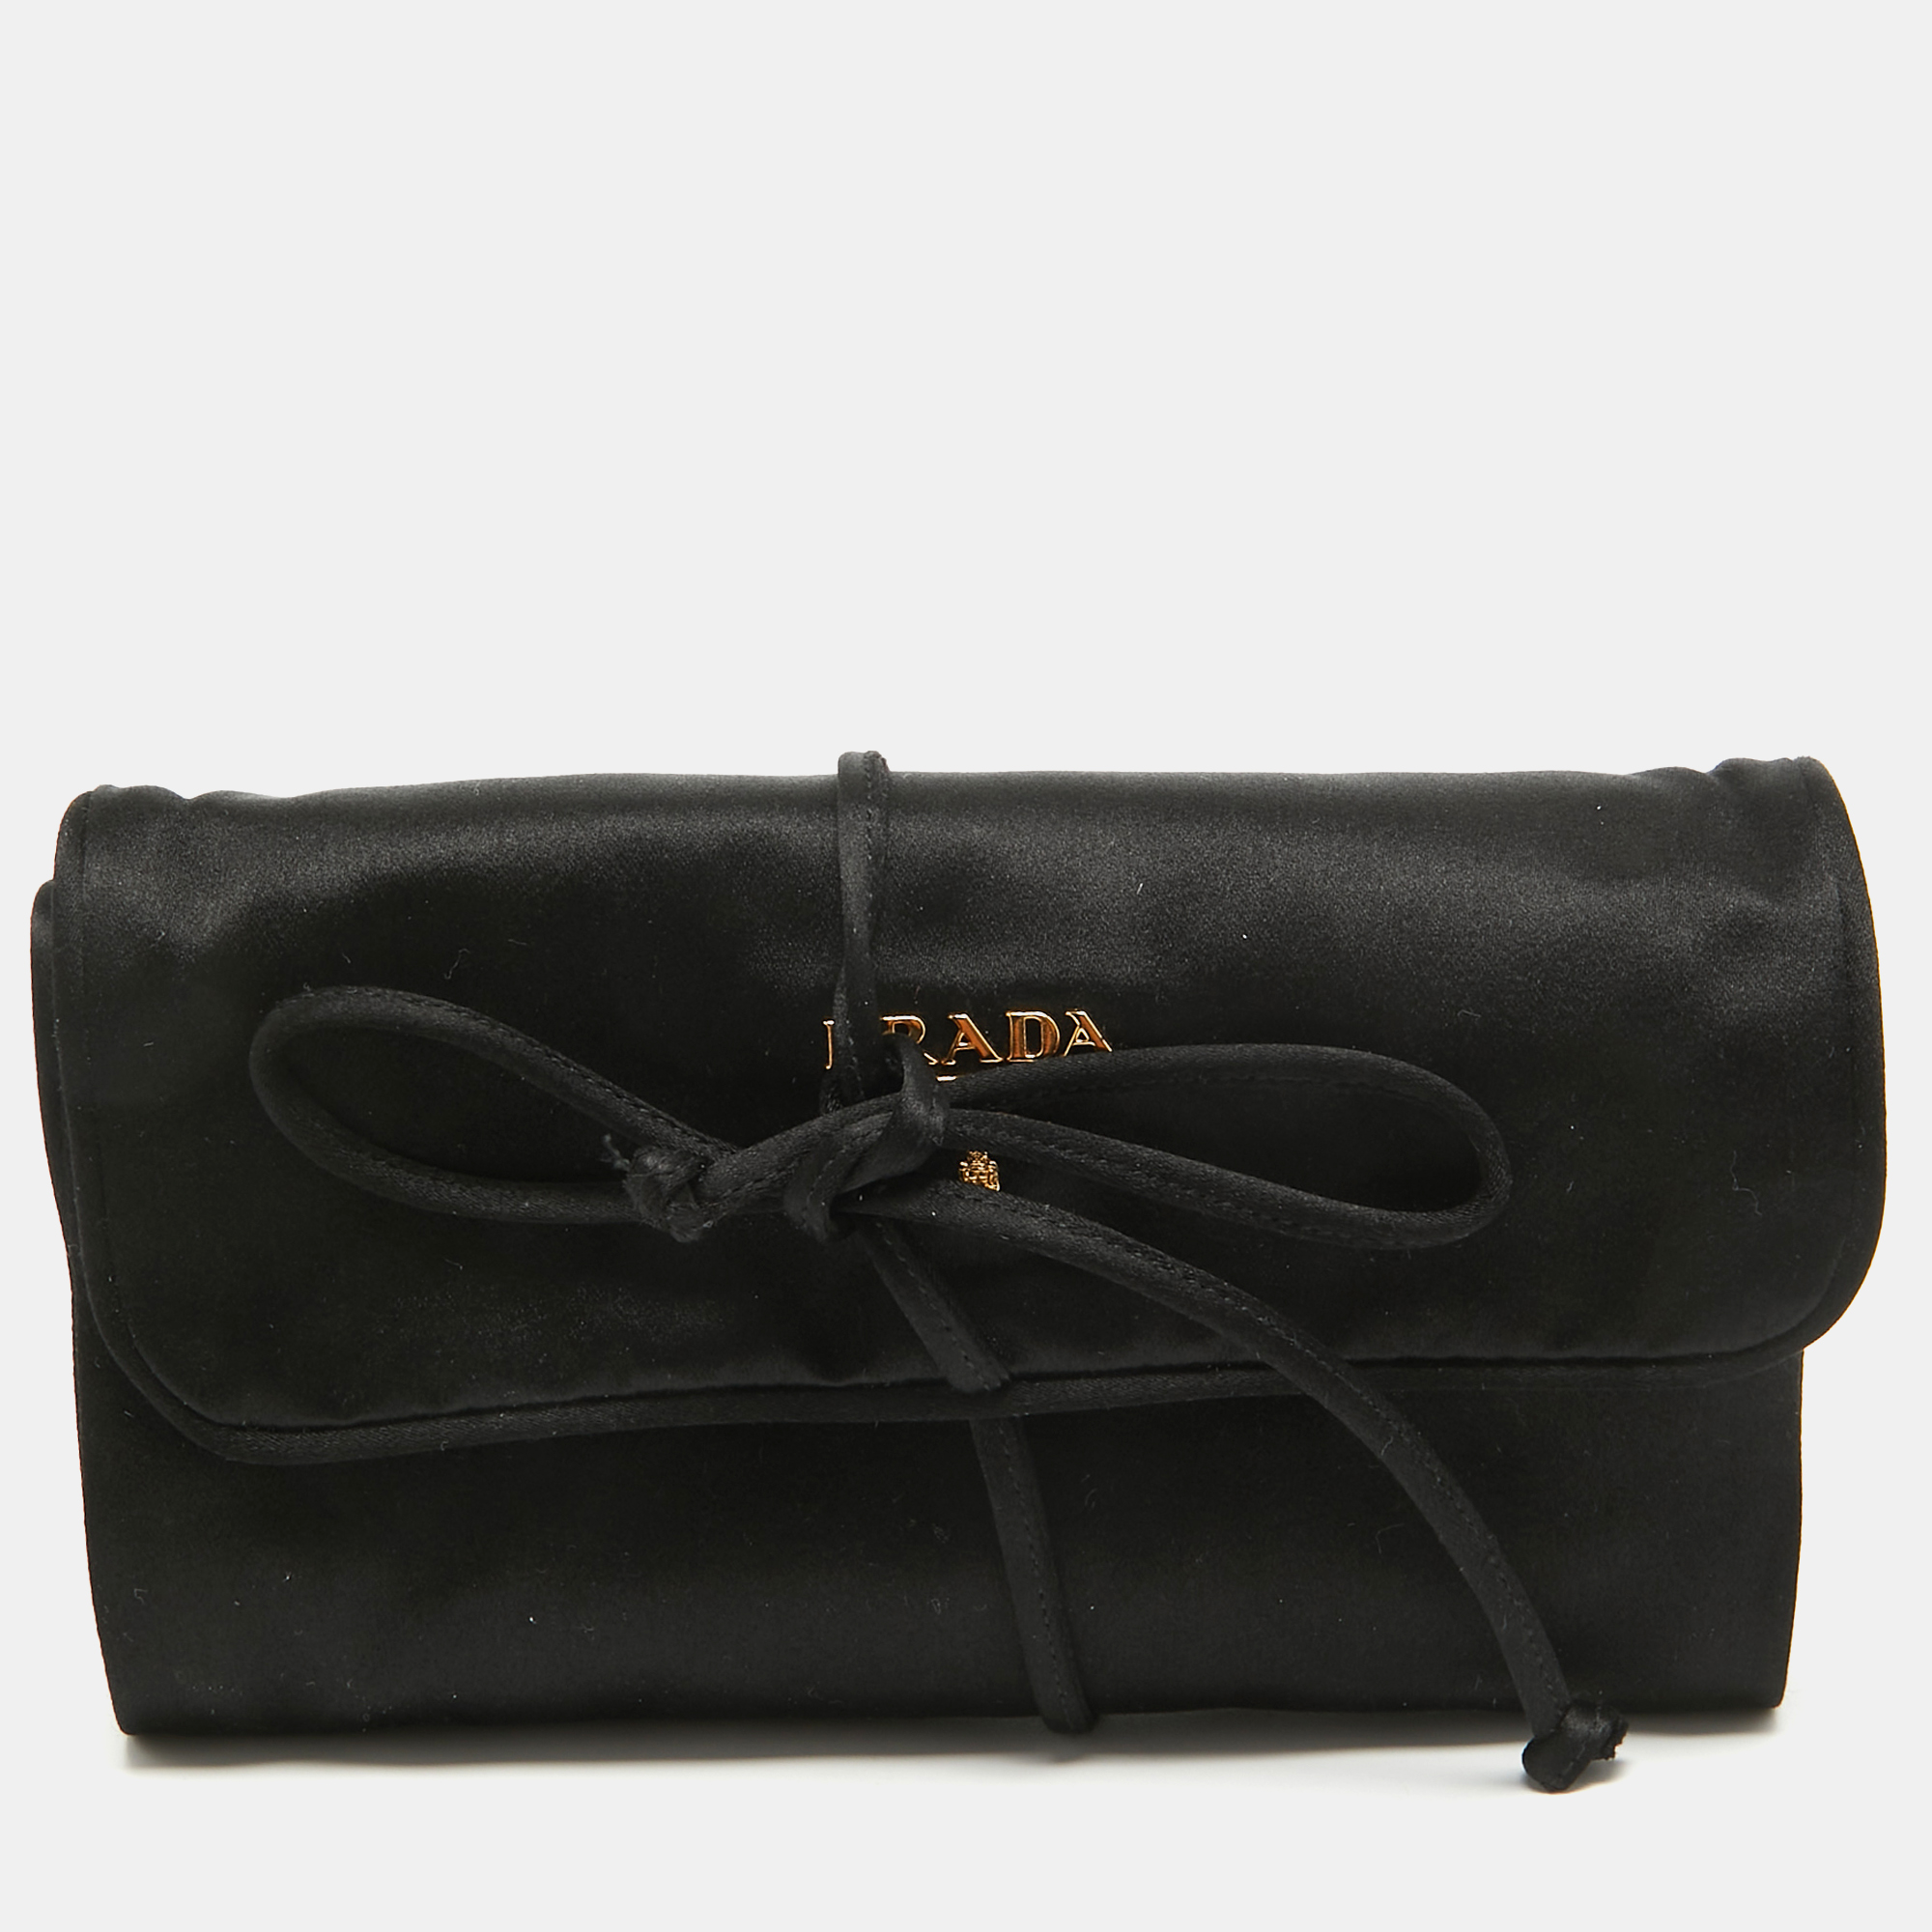 Prada black satin foldable travel pouch